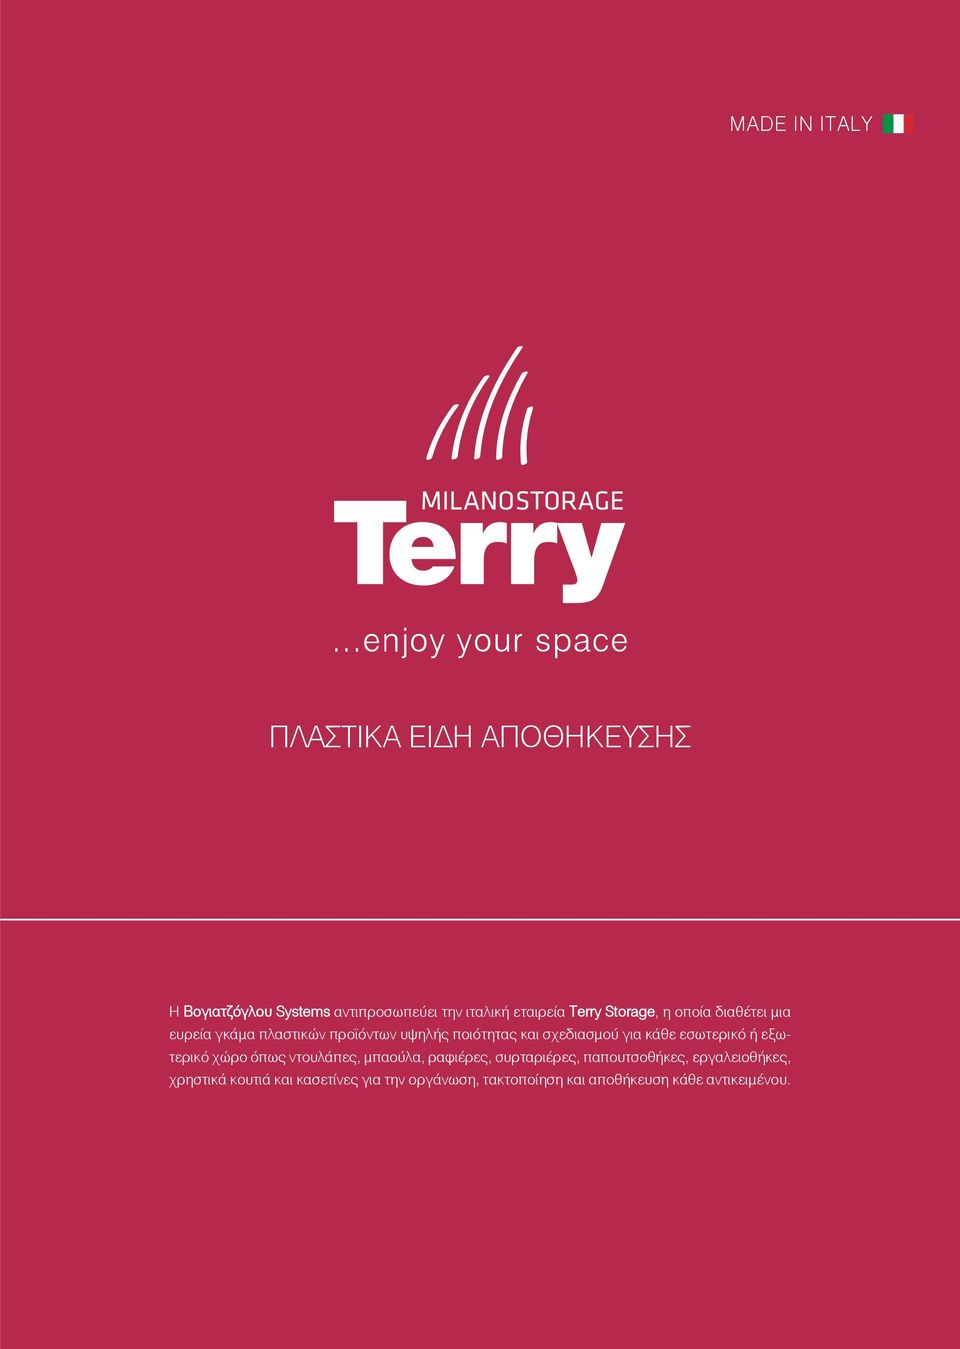 Terry Storage, η οποία διαθέτει μια ευρεία γκάμα πλαστικών προϊόντων υψηλής ποιότητας και σχεδιασμού για